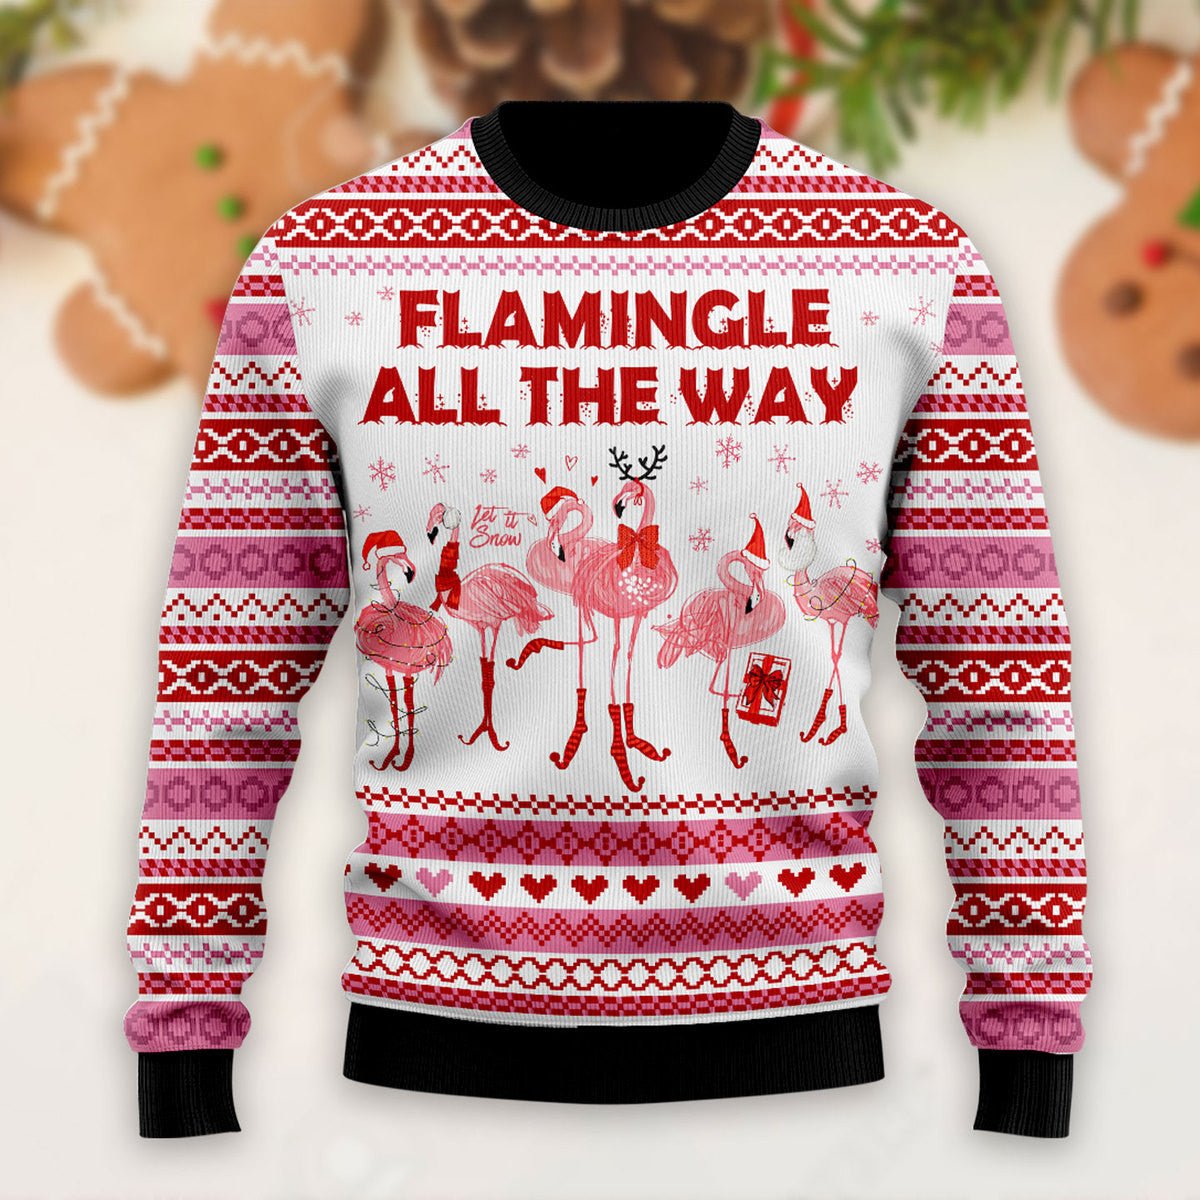 Flamingle All The Way Ugly Sweater - TG1121QA